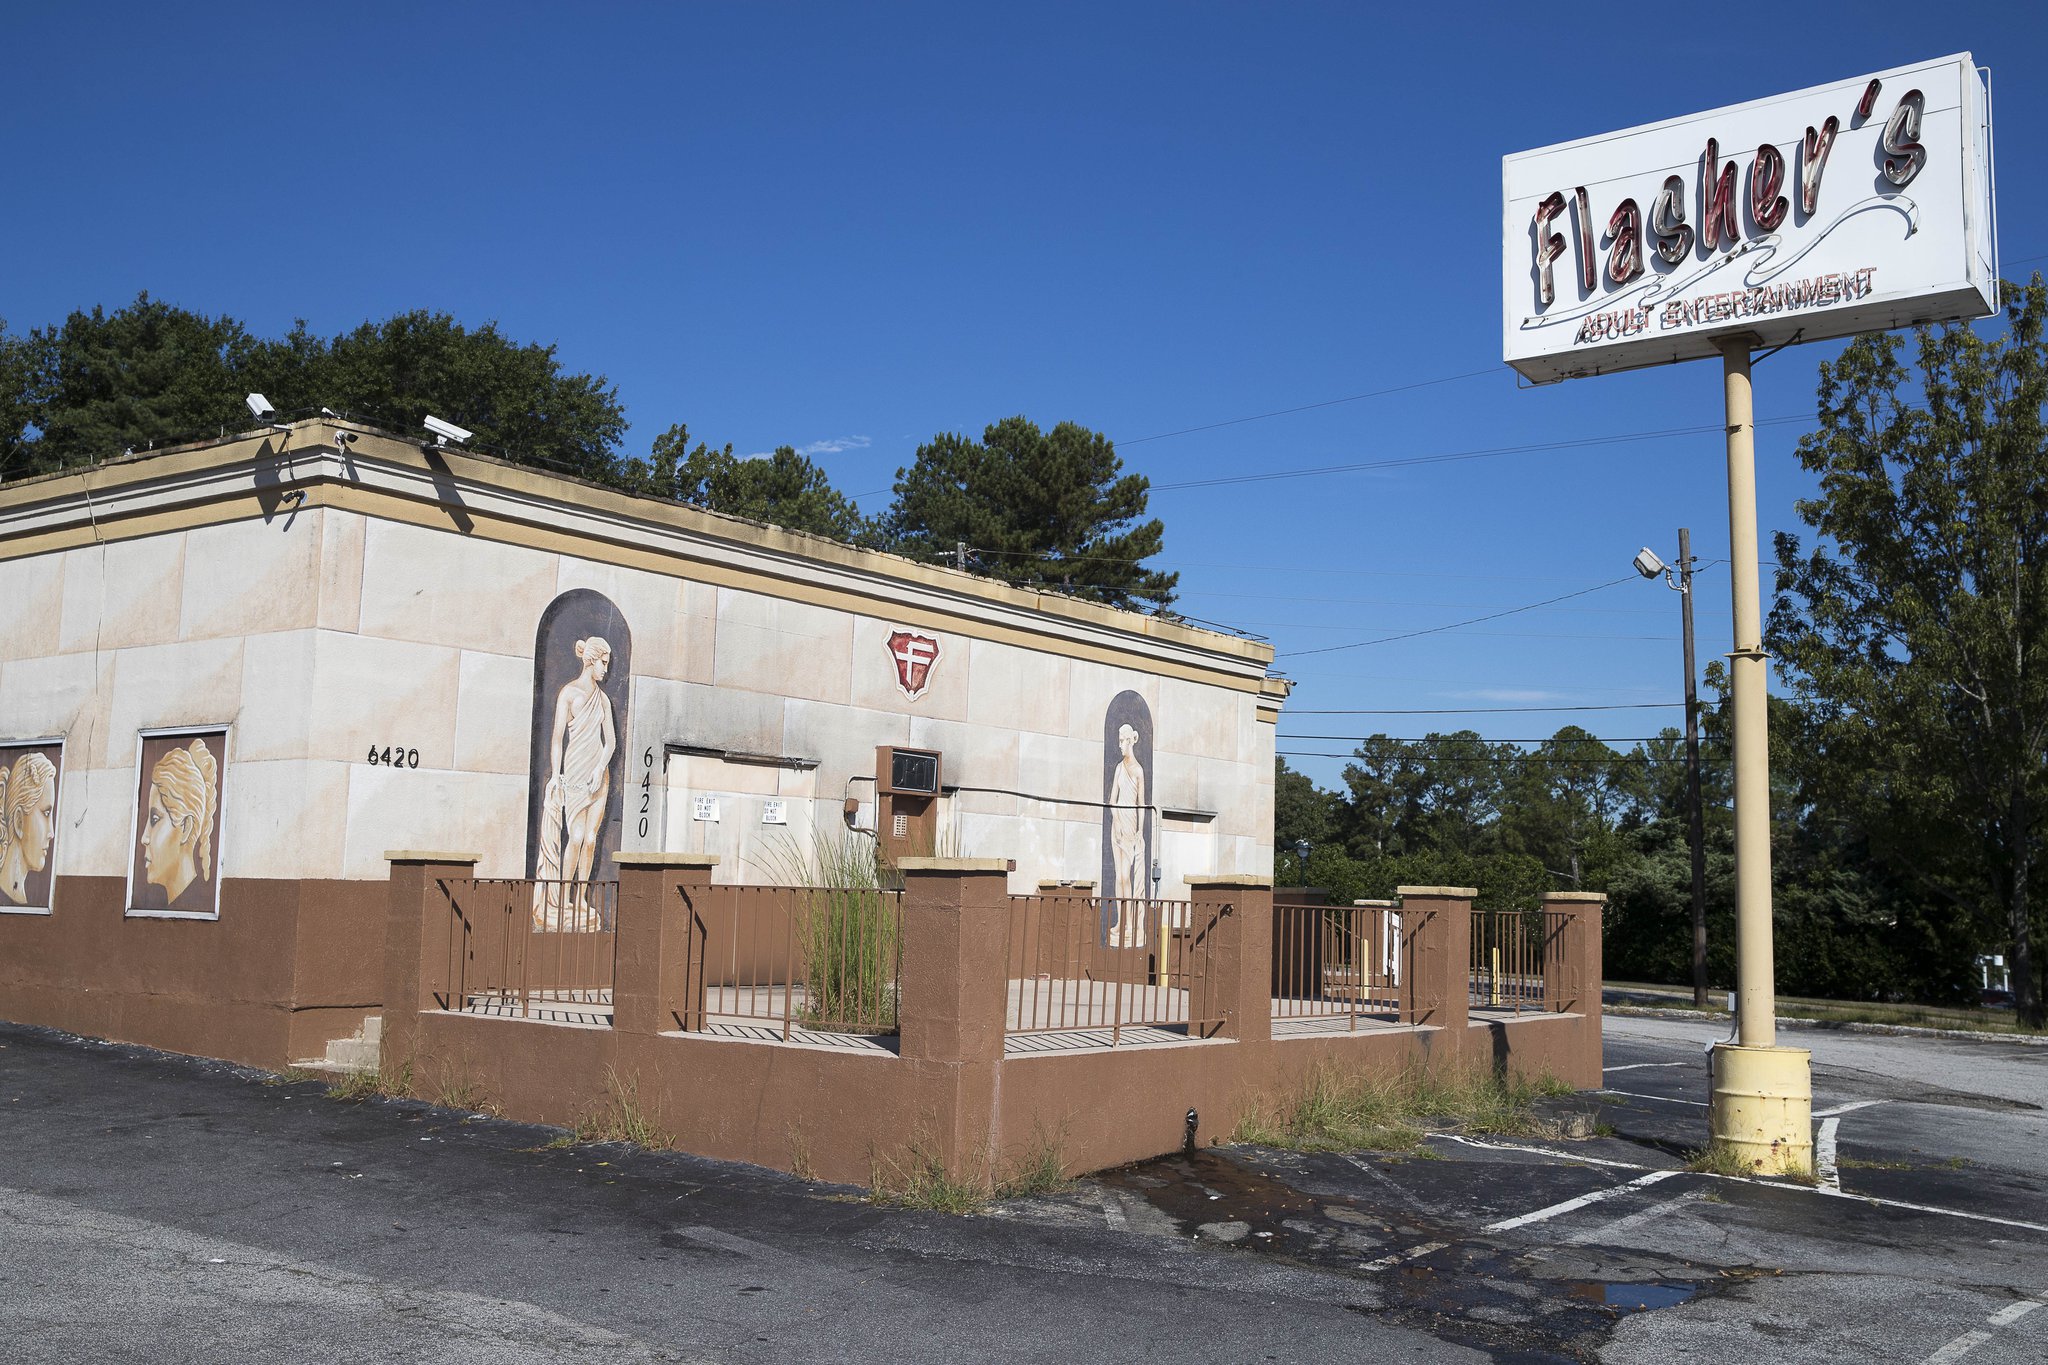 Flashers strip club sues Sandy Springs